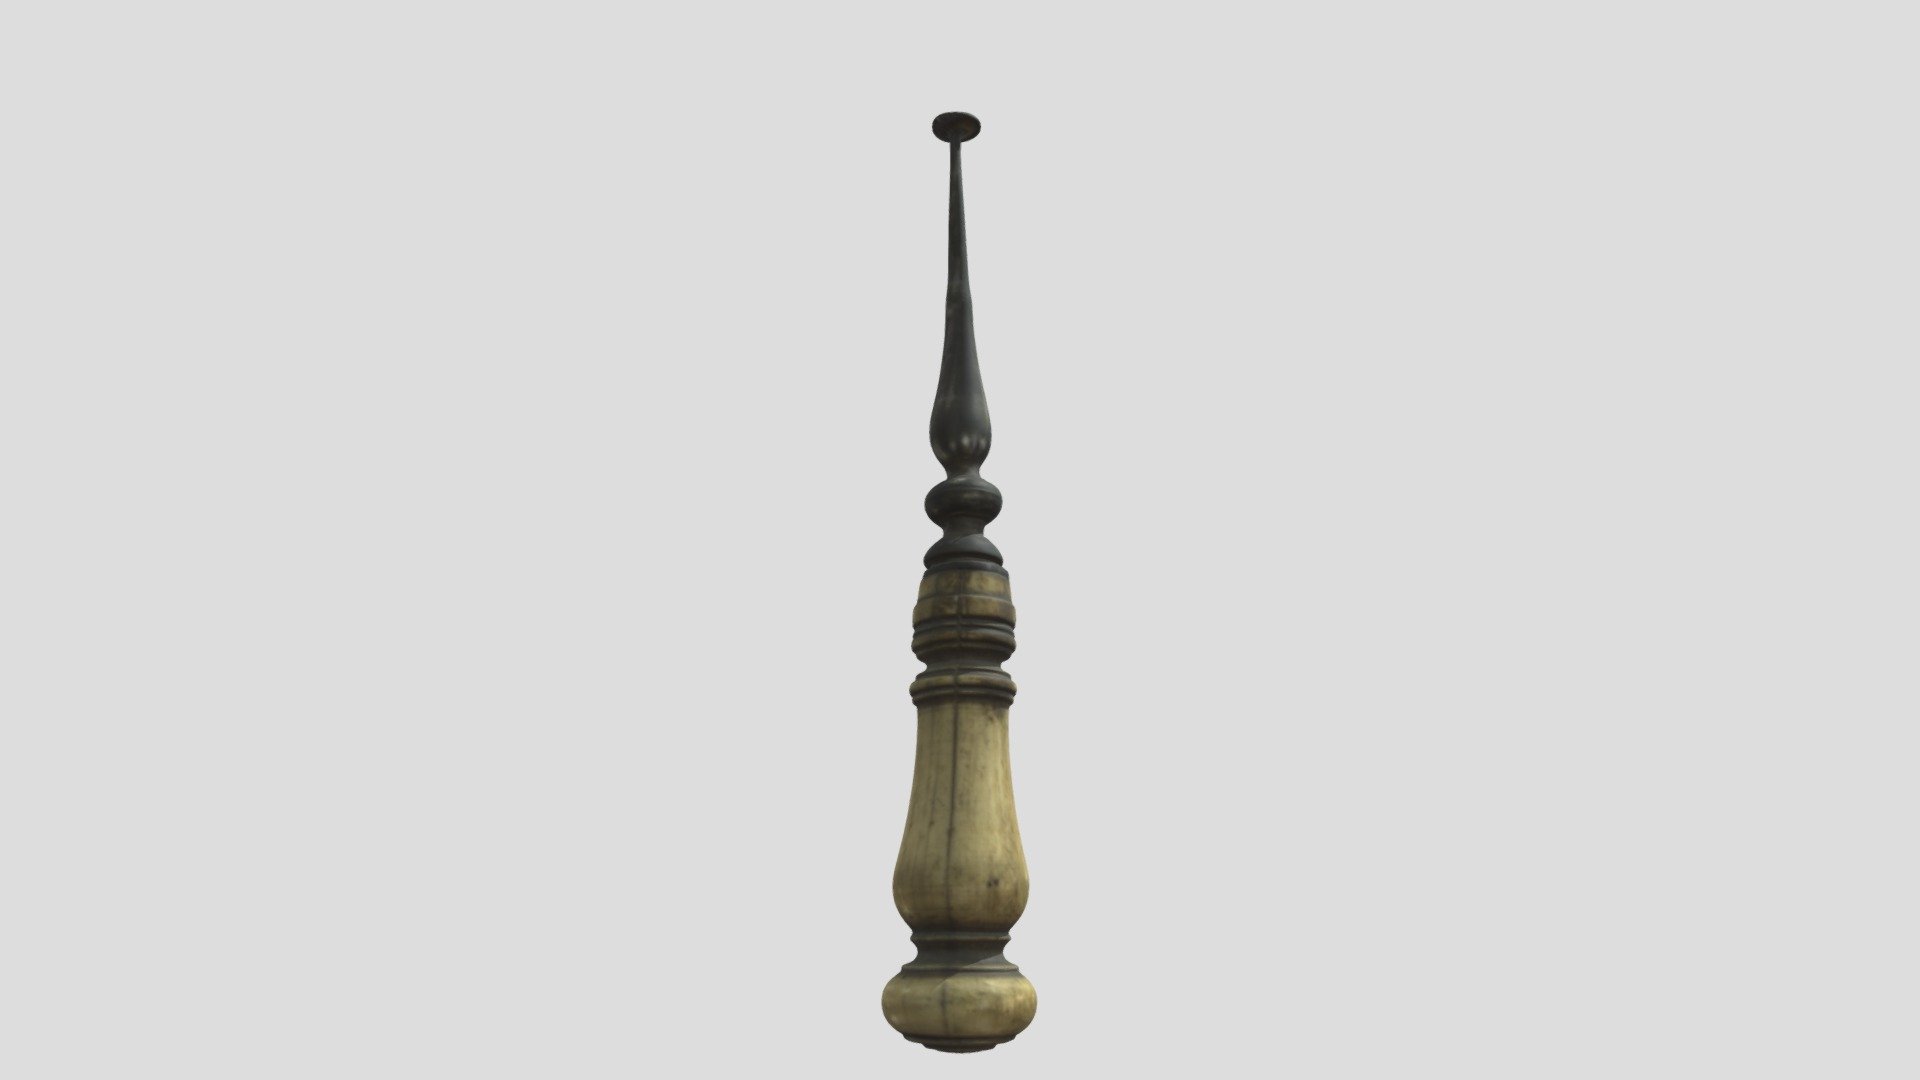 Dental restorative instrument - plugger, c. 1880 - 3D model by ais1 ...